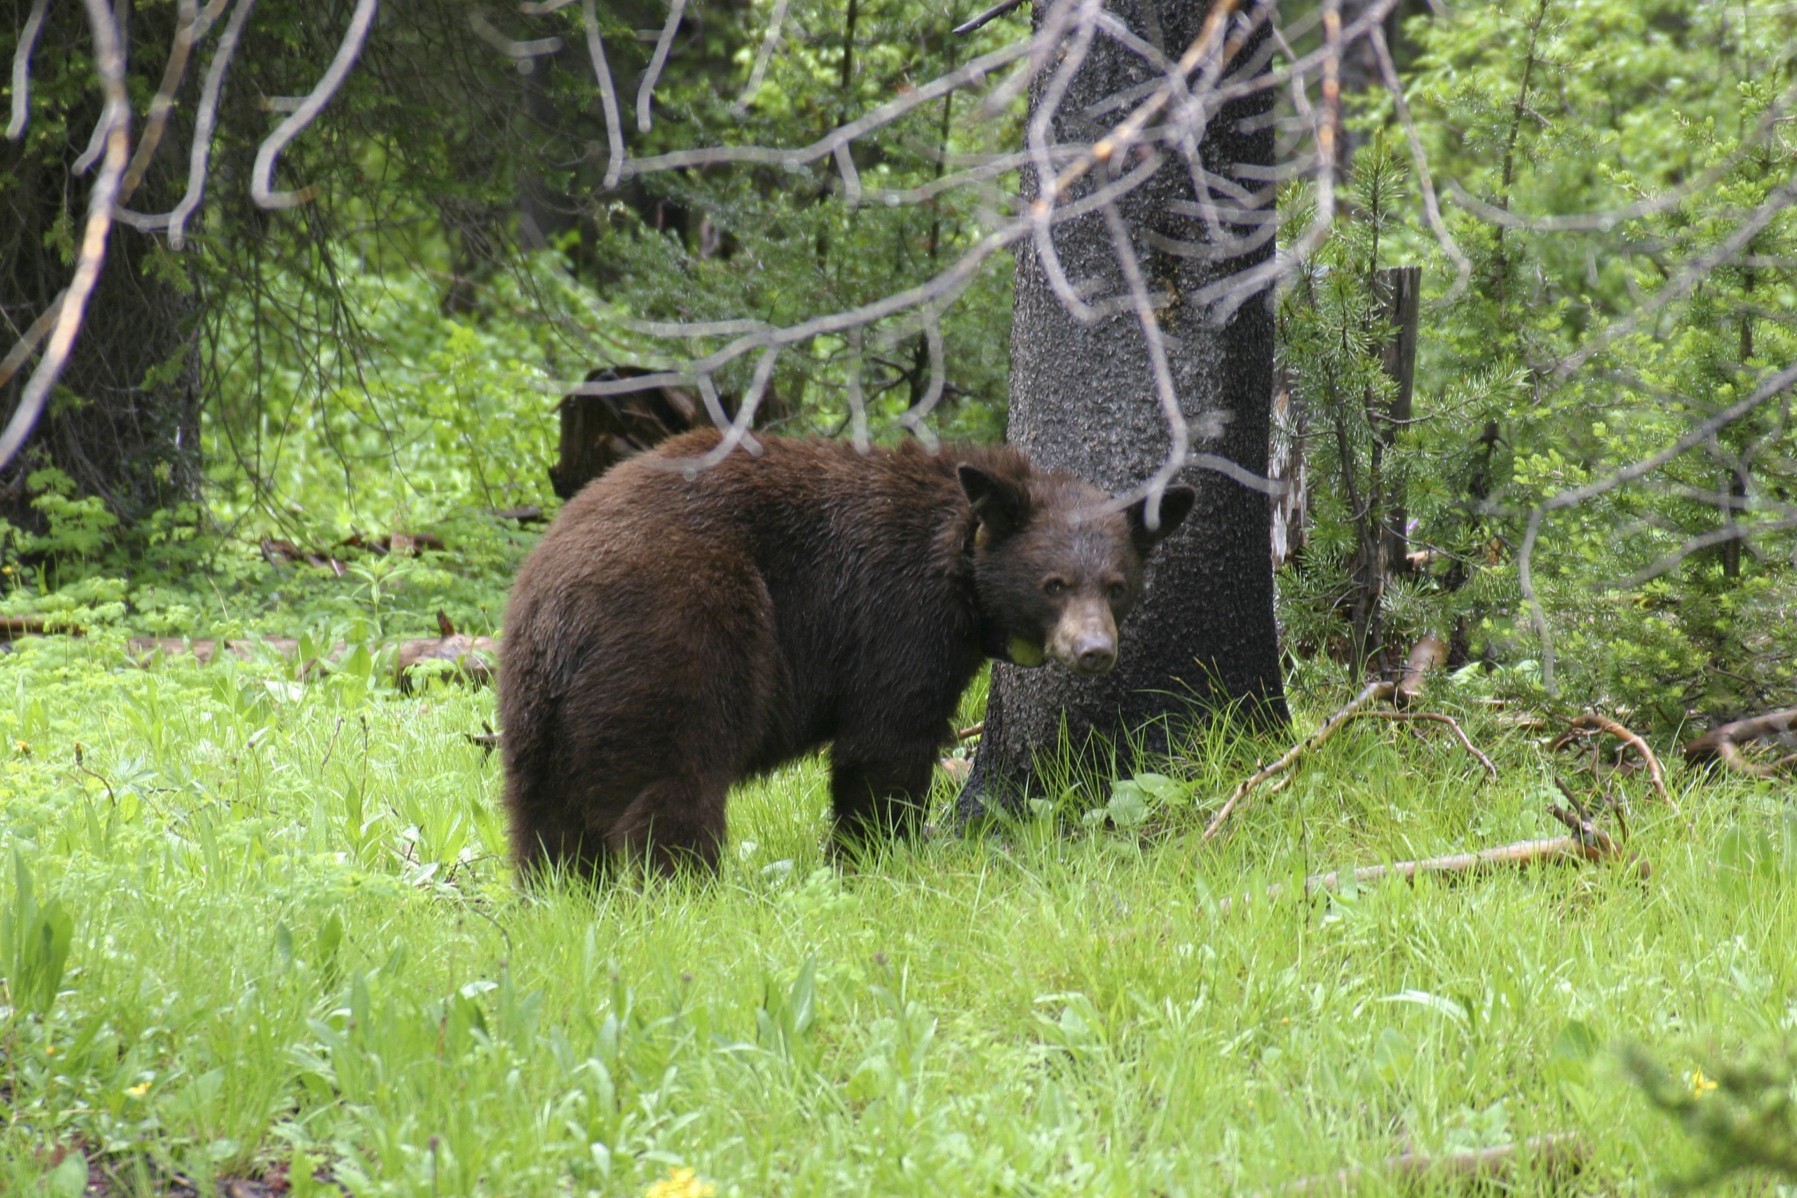 A black bear cub